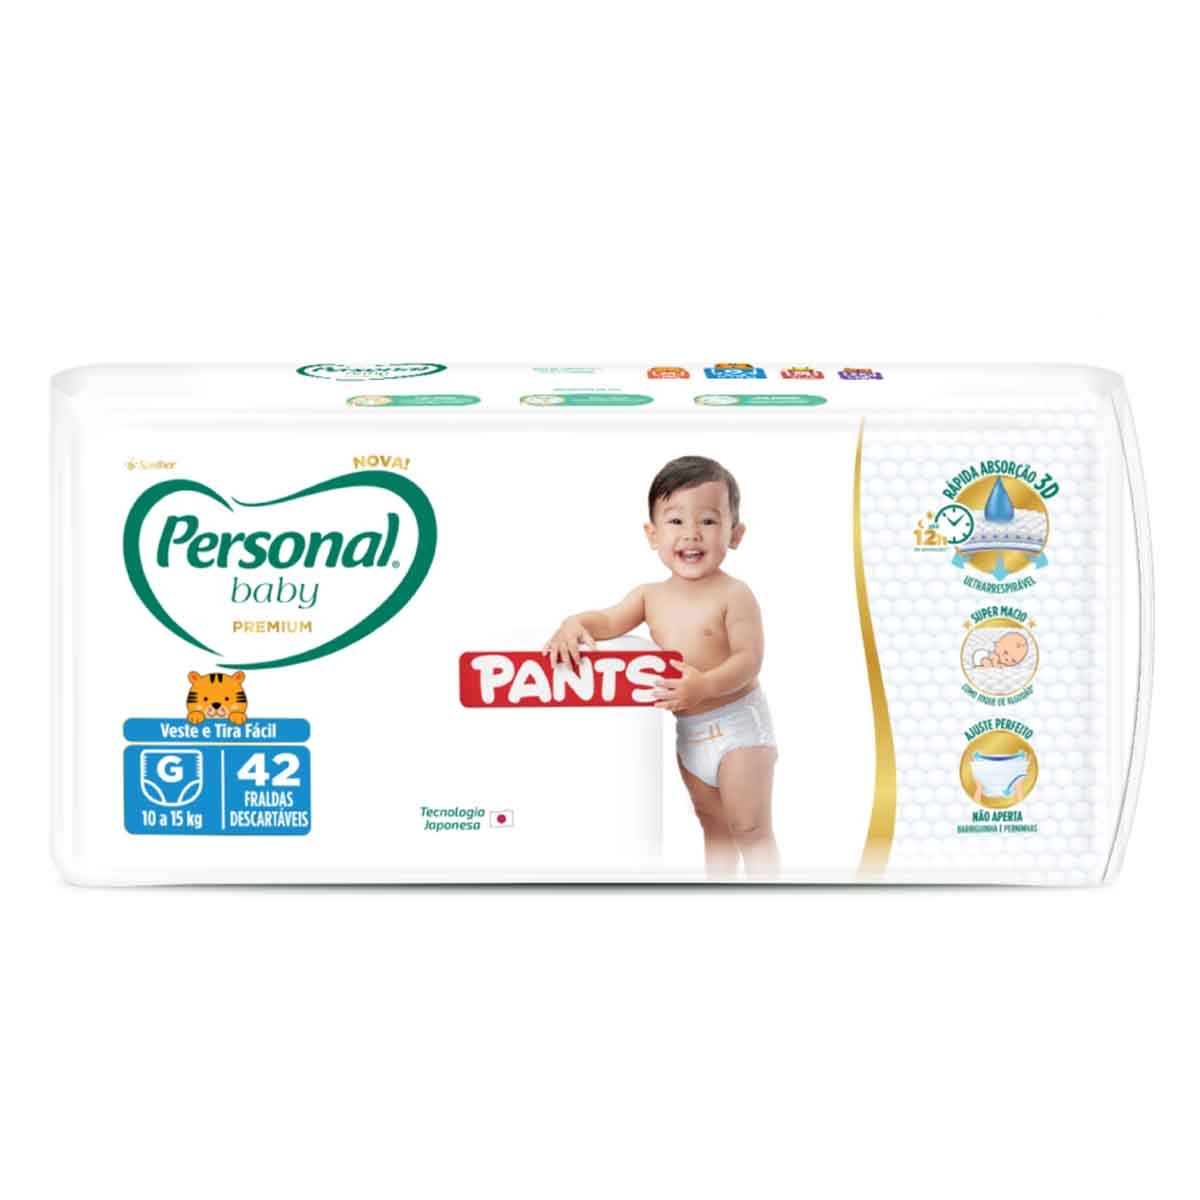 Fralda Personal Baby Premium Pants GG 34 unidades - Oferta